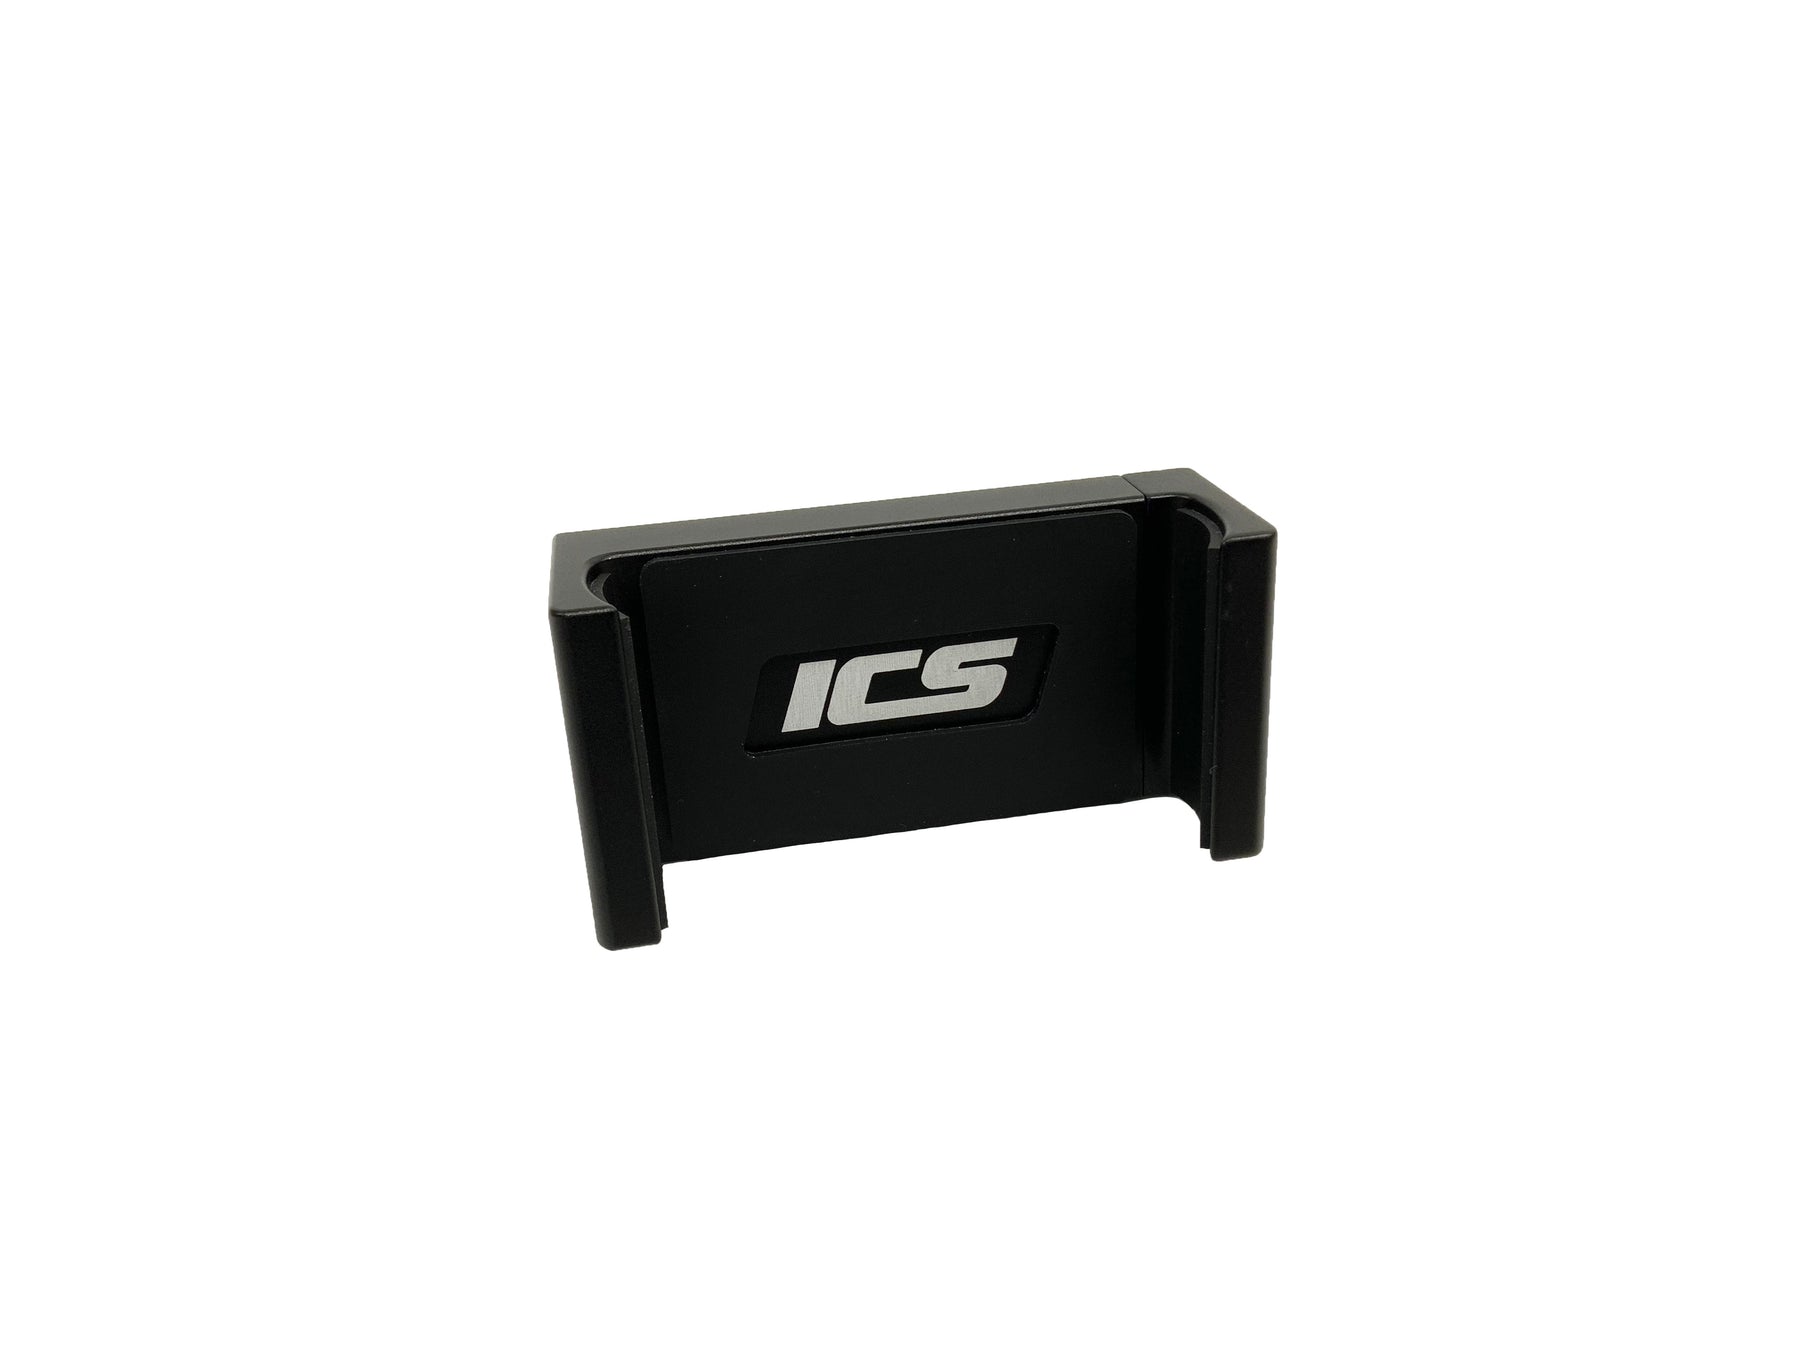 ICS Universal Phone Holder